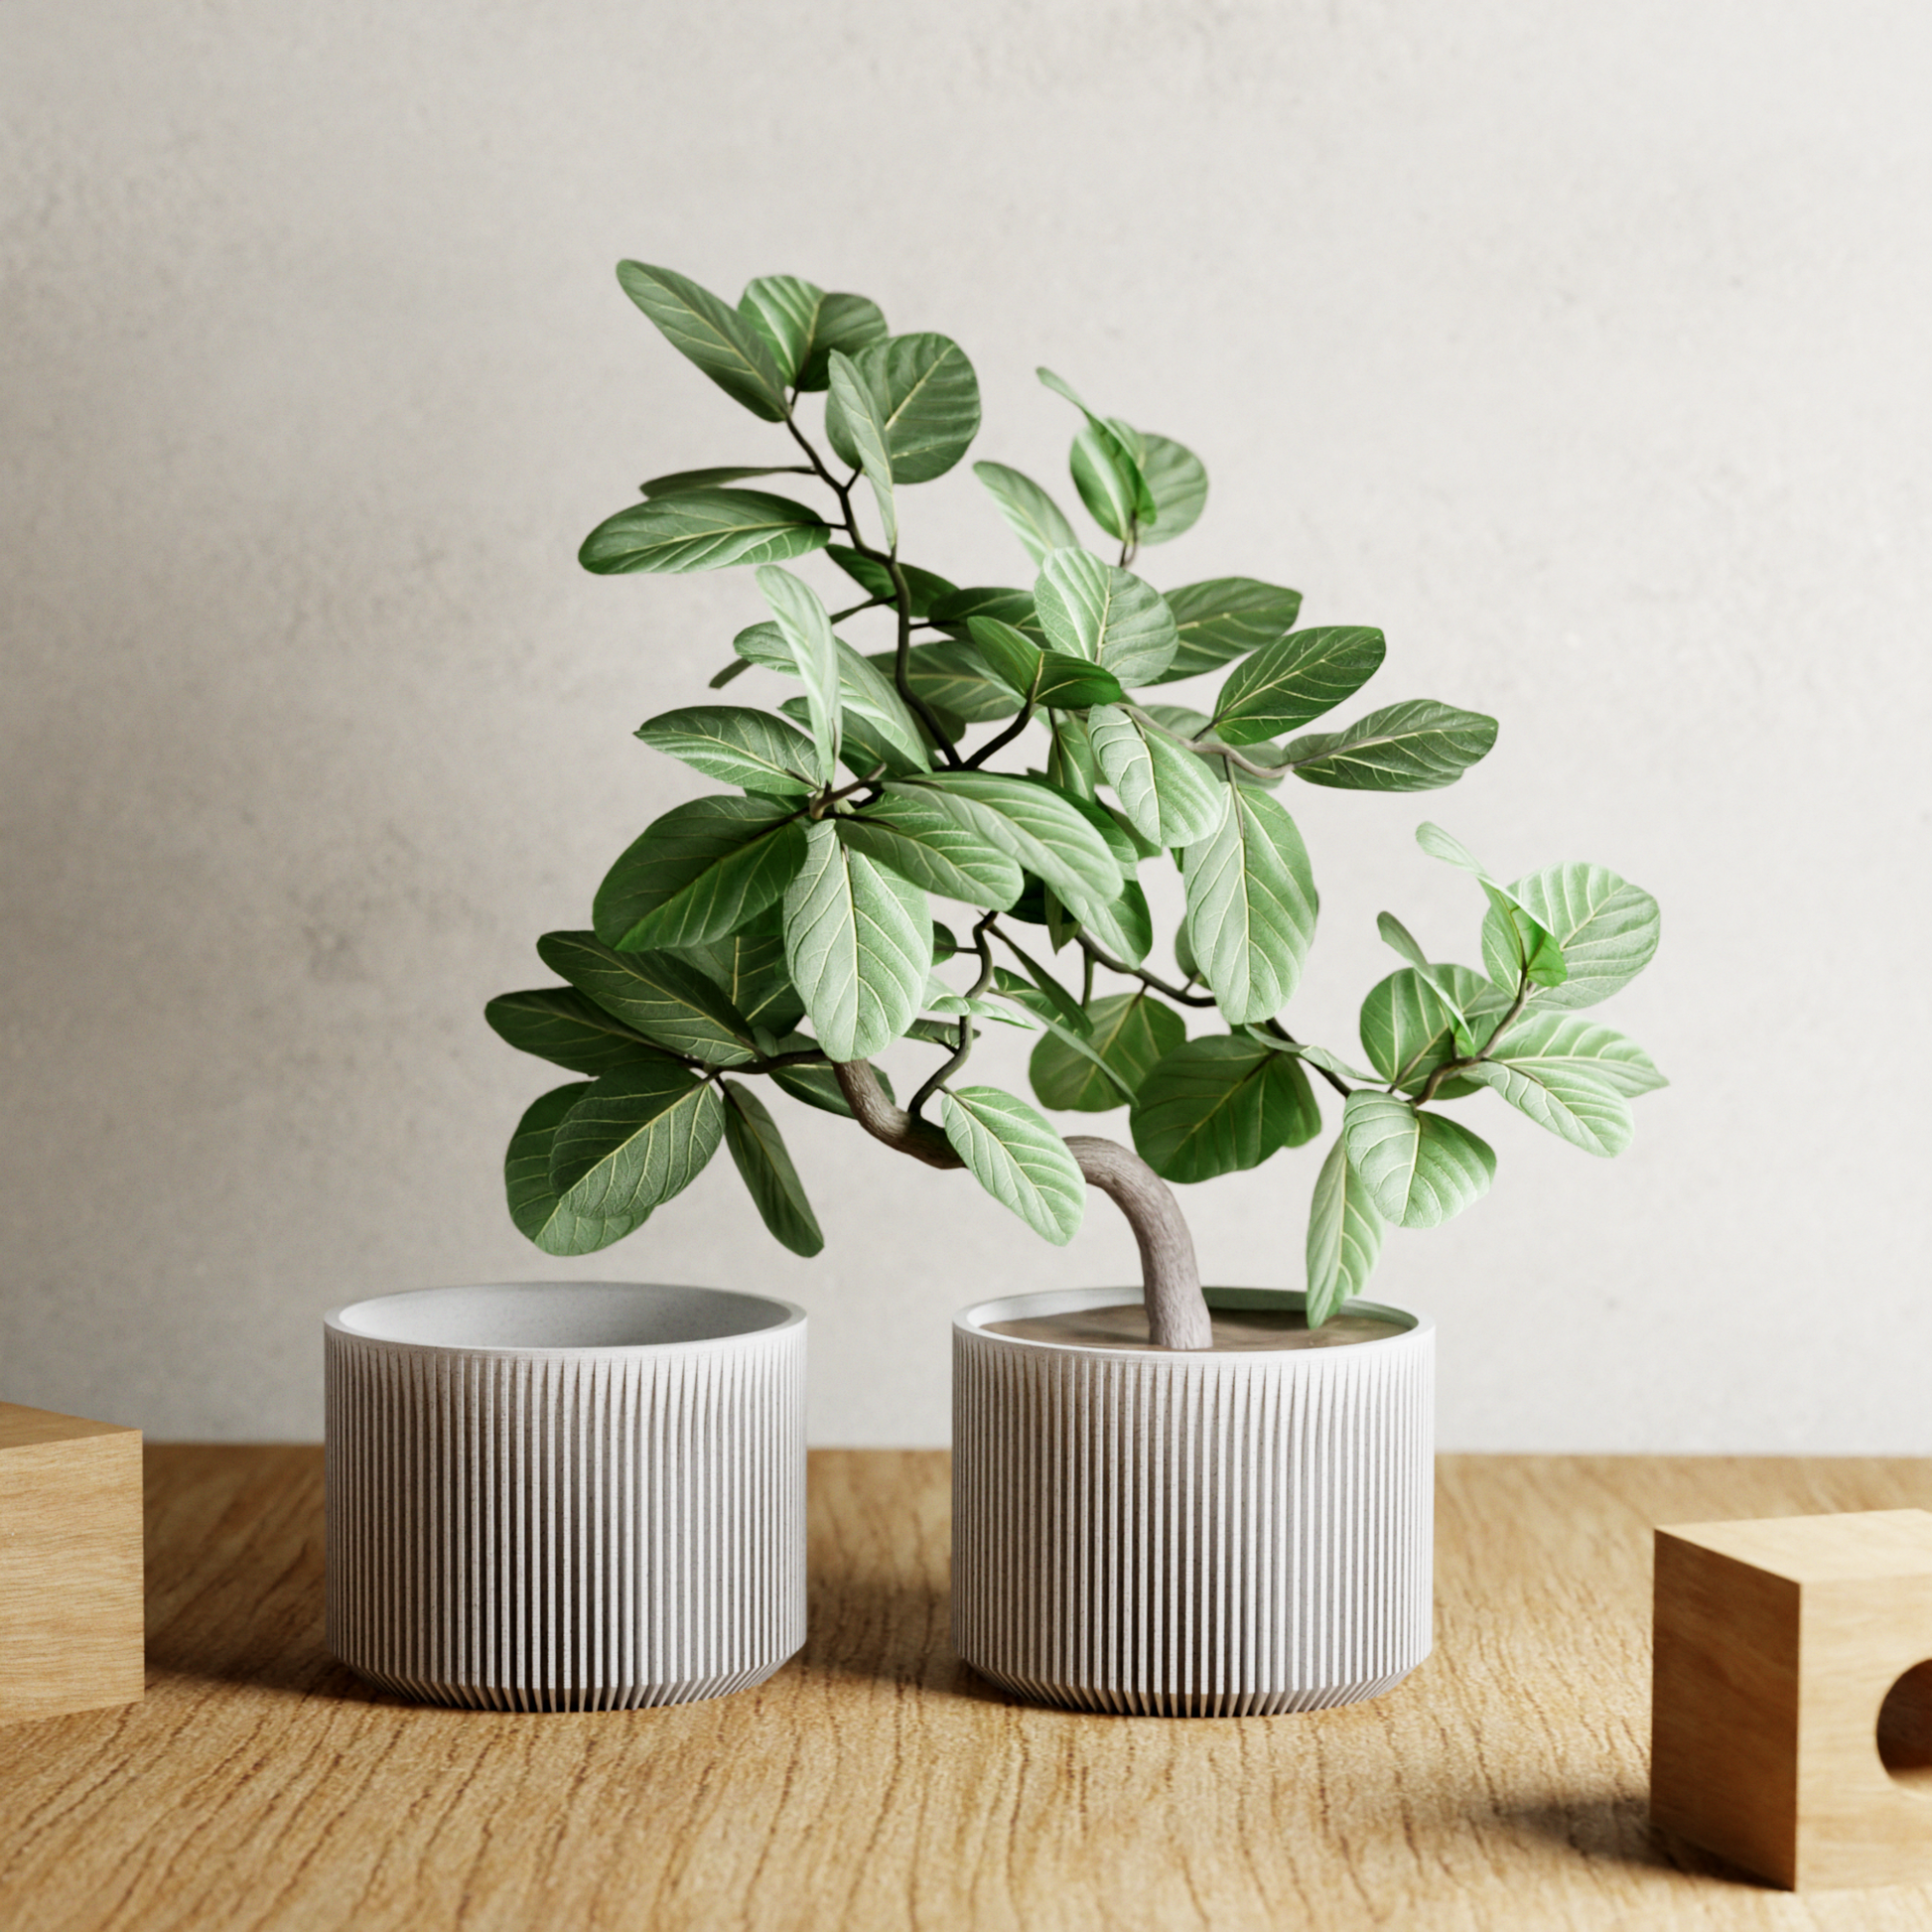 Modernized Pottery - SAKURA Planter  Modernized Pottery   -better made easy-eco-friendly-sustainable-gifting